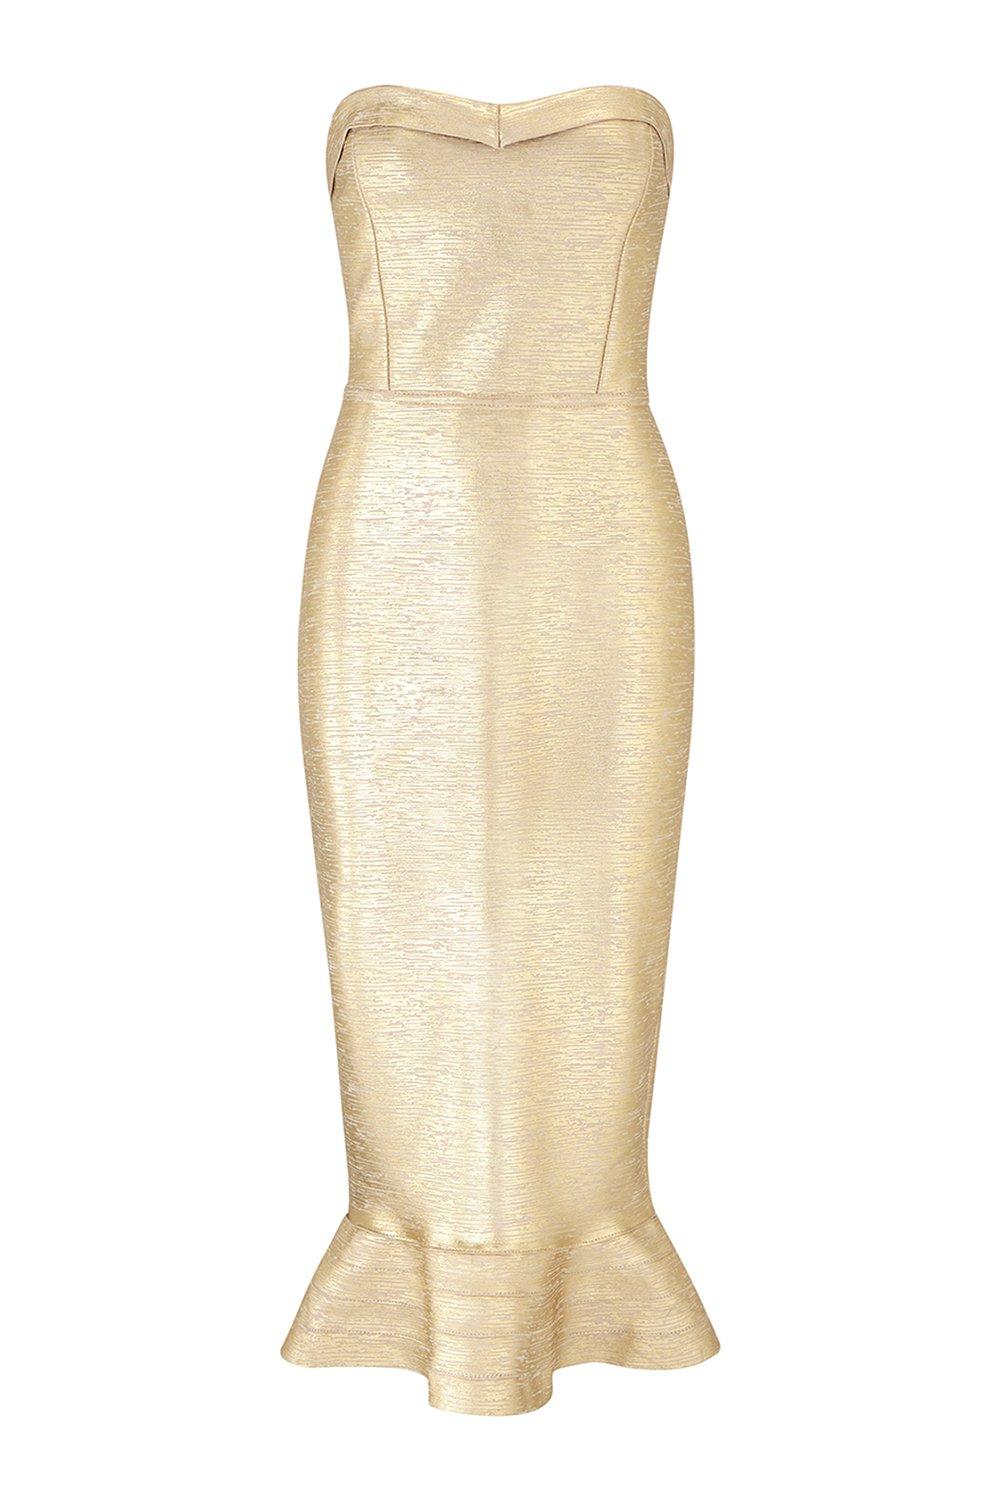 karen millen white and gold dress